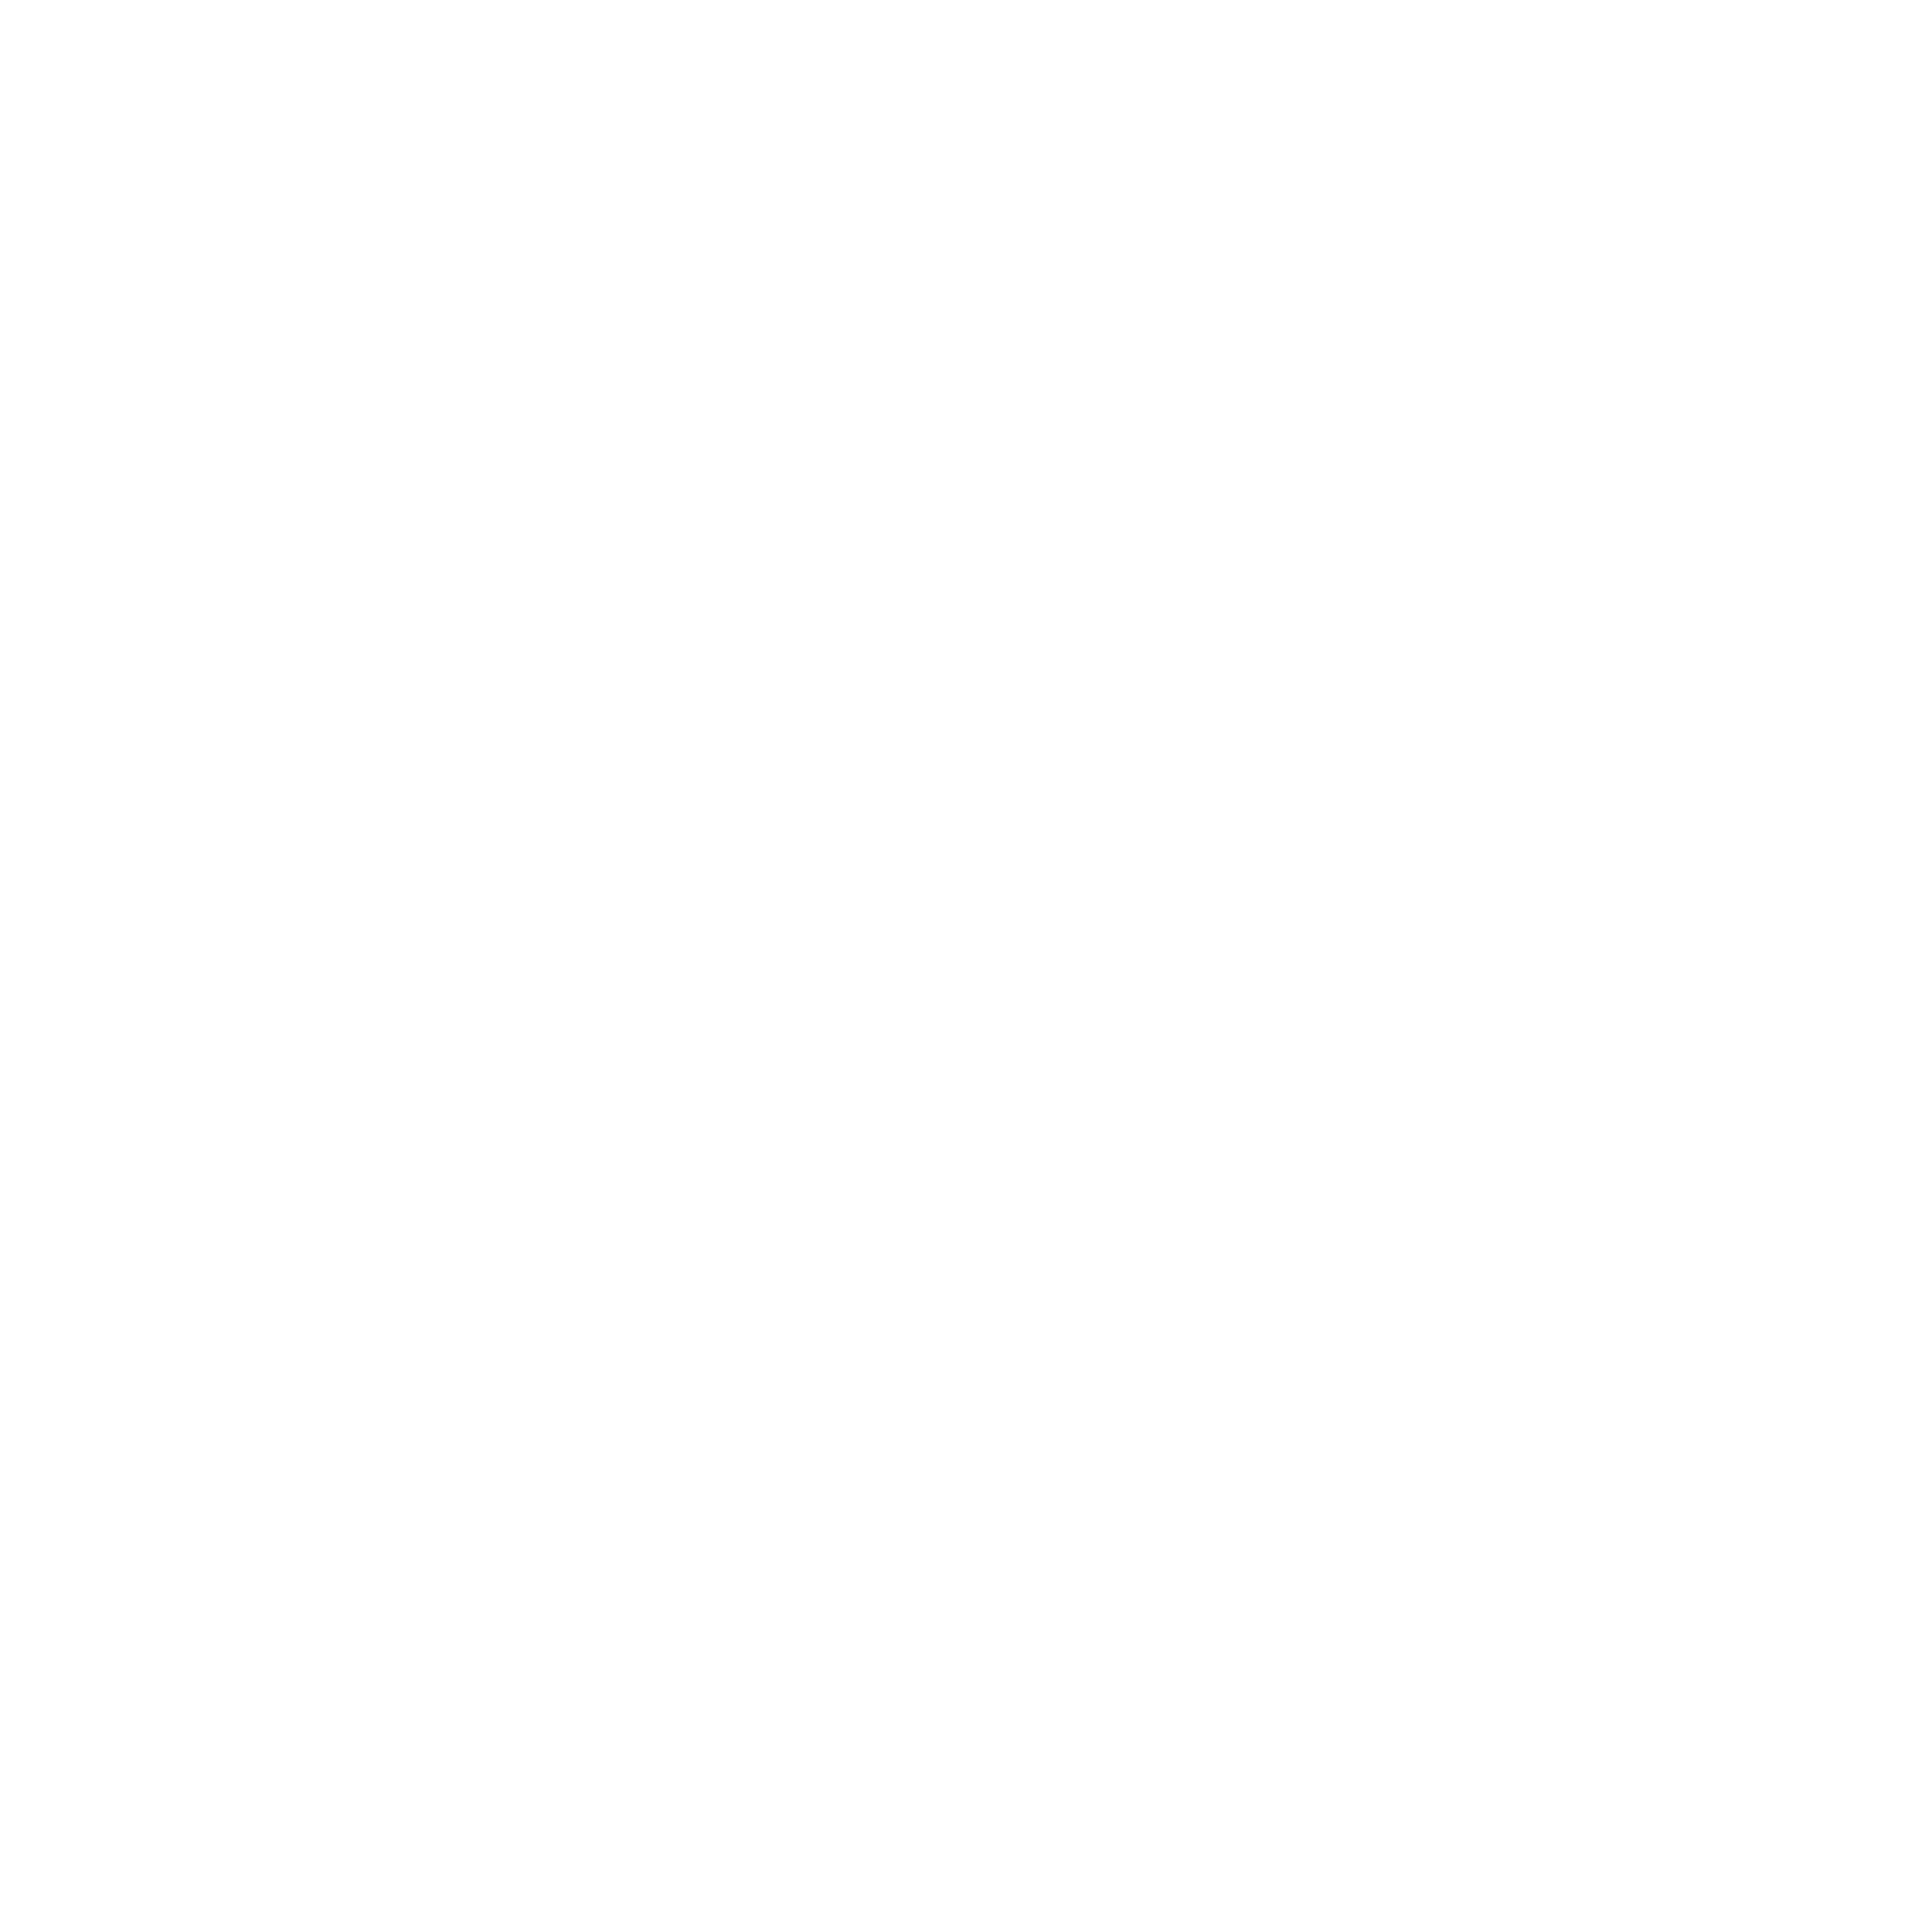 Leki Logo - Leki Logo PNG Transparent & SVG Vector - Freebie Supply